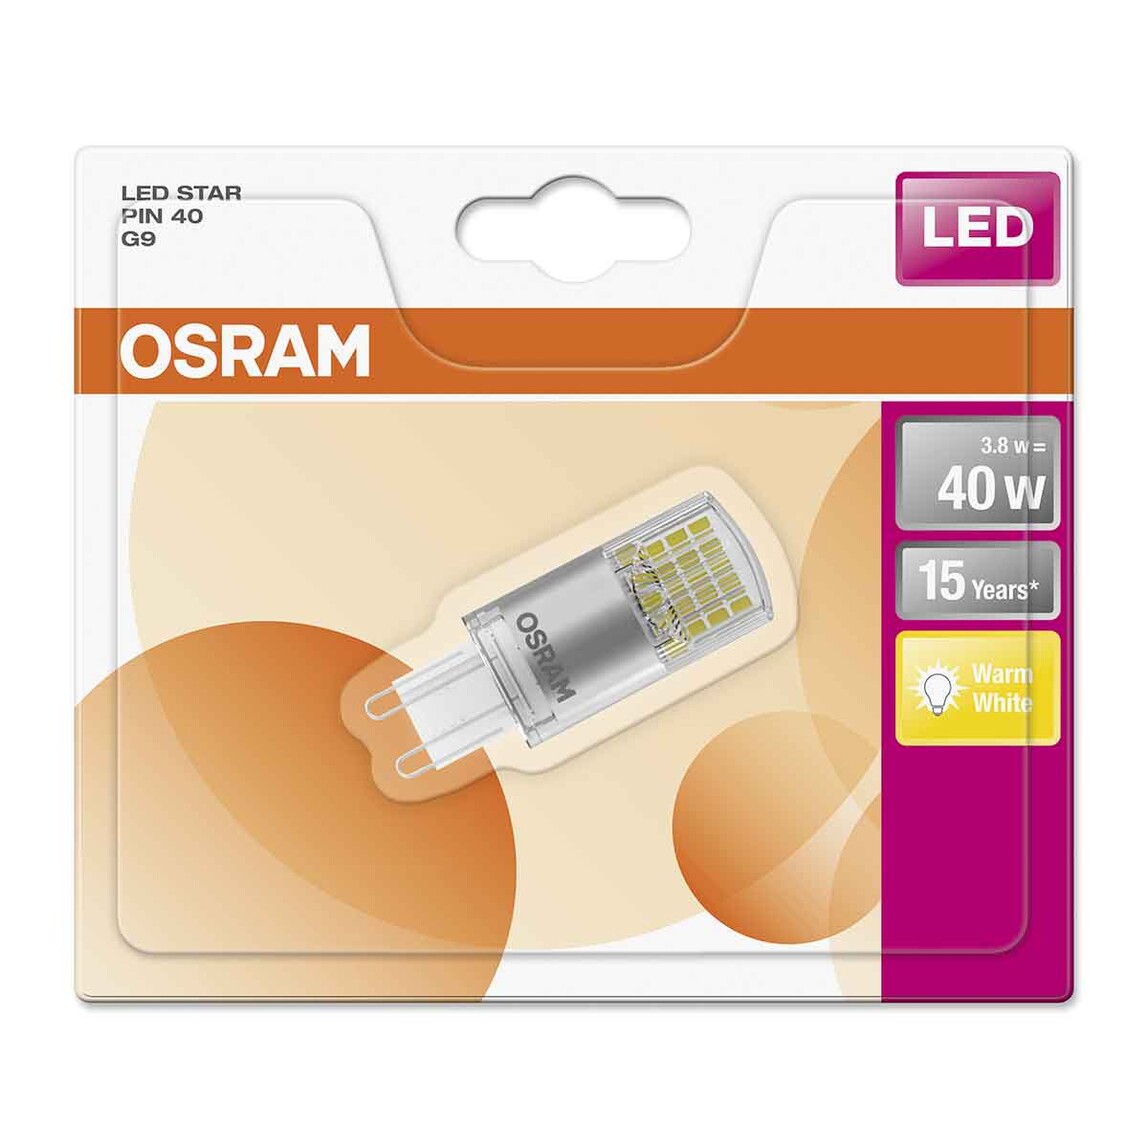    Osram Pin CL40 3.8 W Sarı Led G9 Duy Led Ampul   